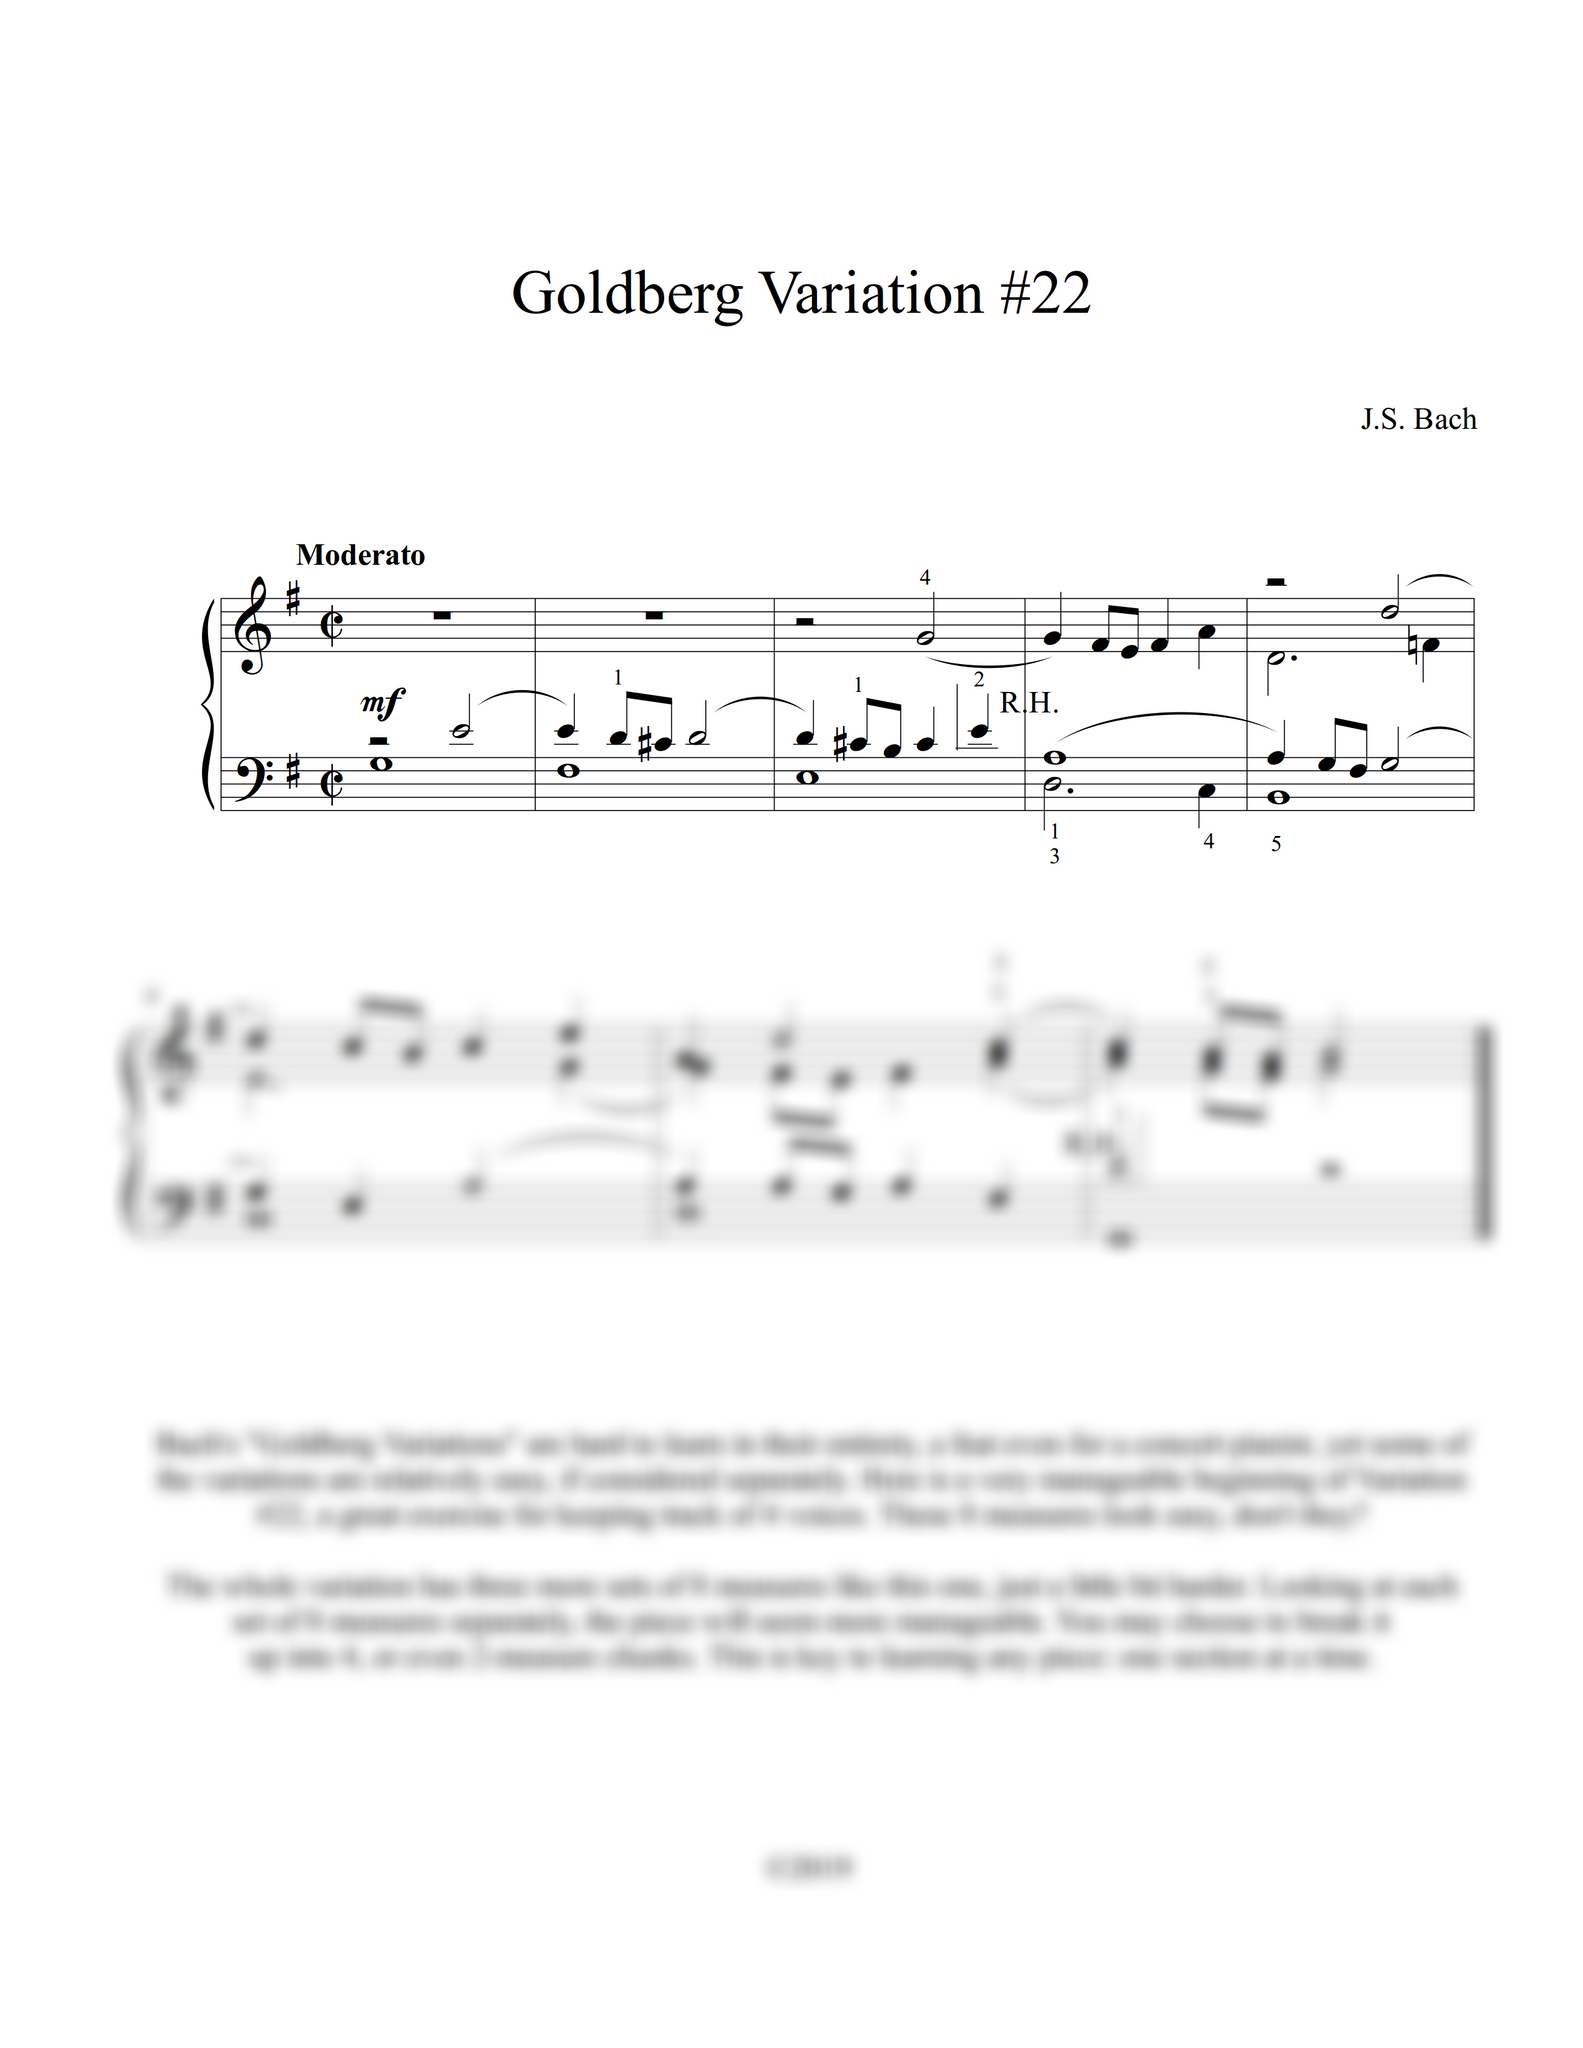 J.S. Bach: Goldberg Variation No. 22, BWV 988 – arranged for piano by Eleonor Bindman